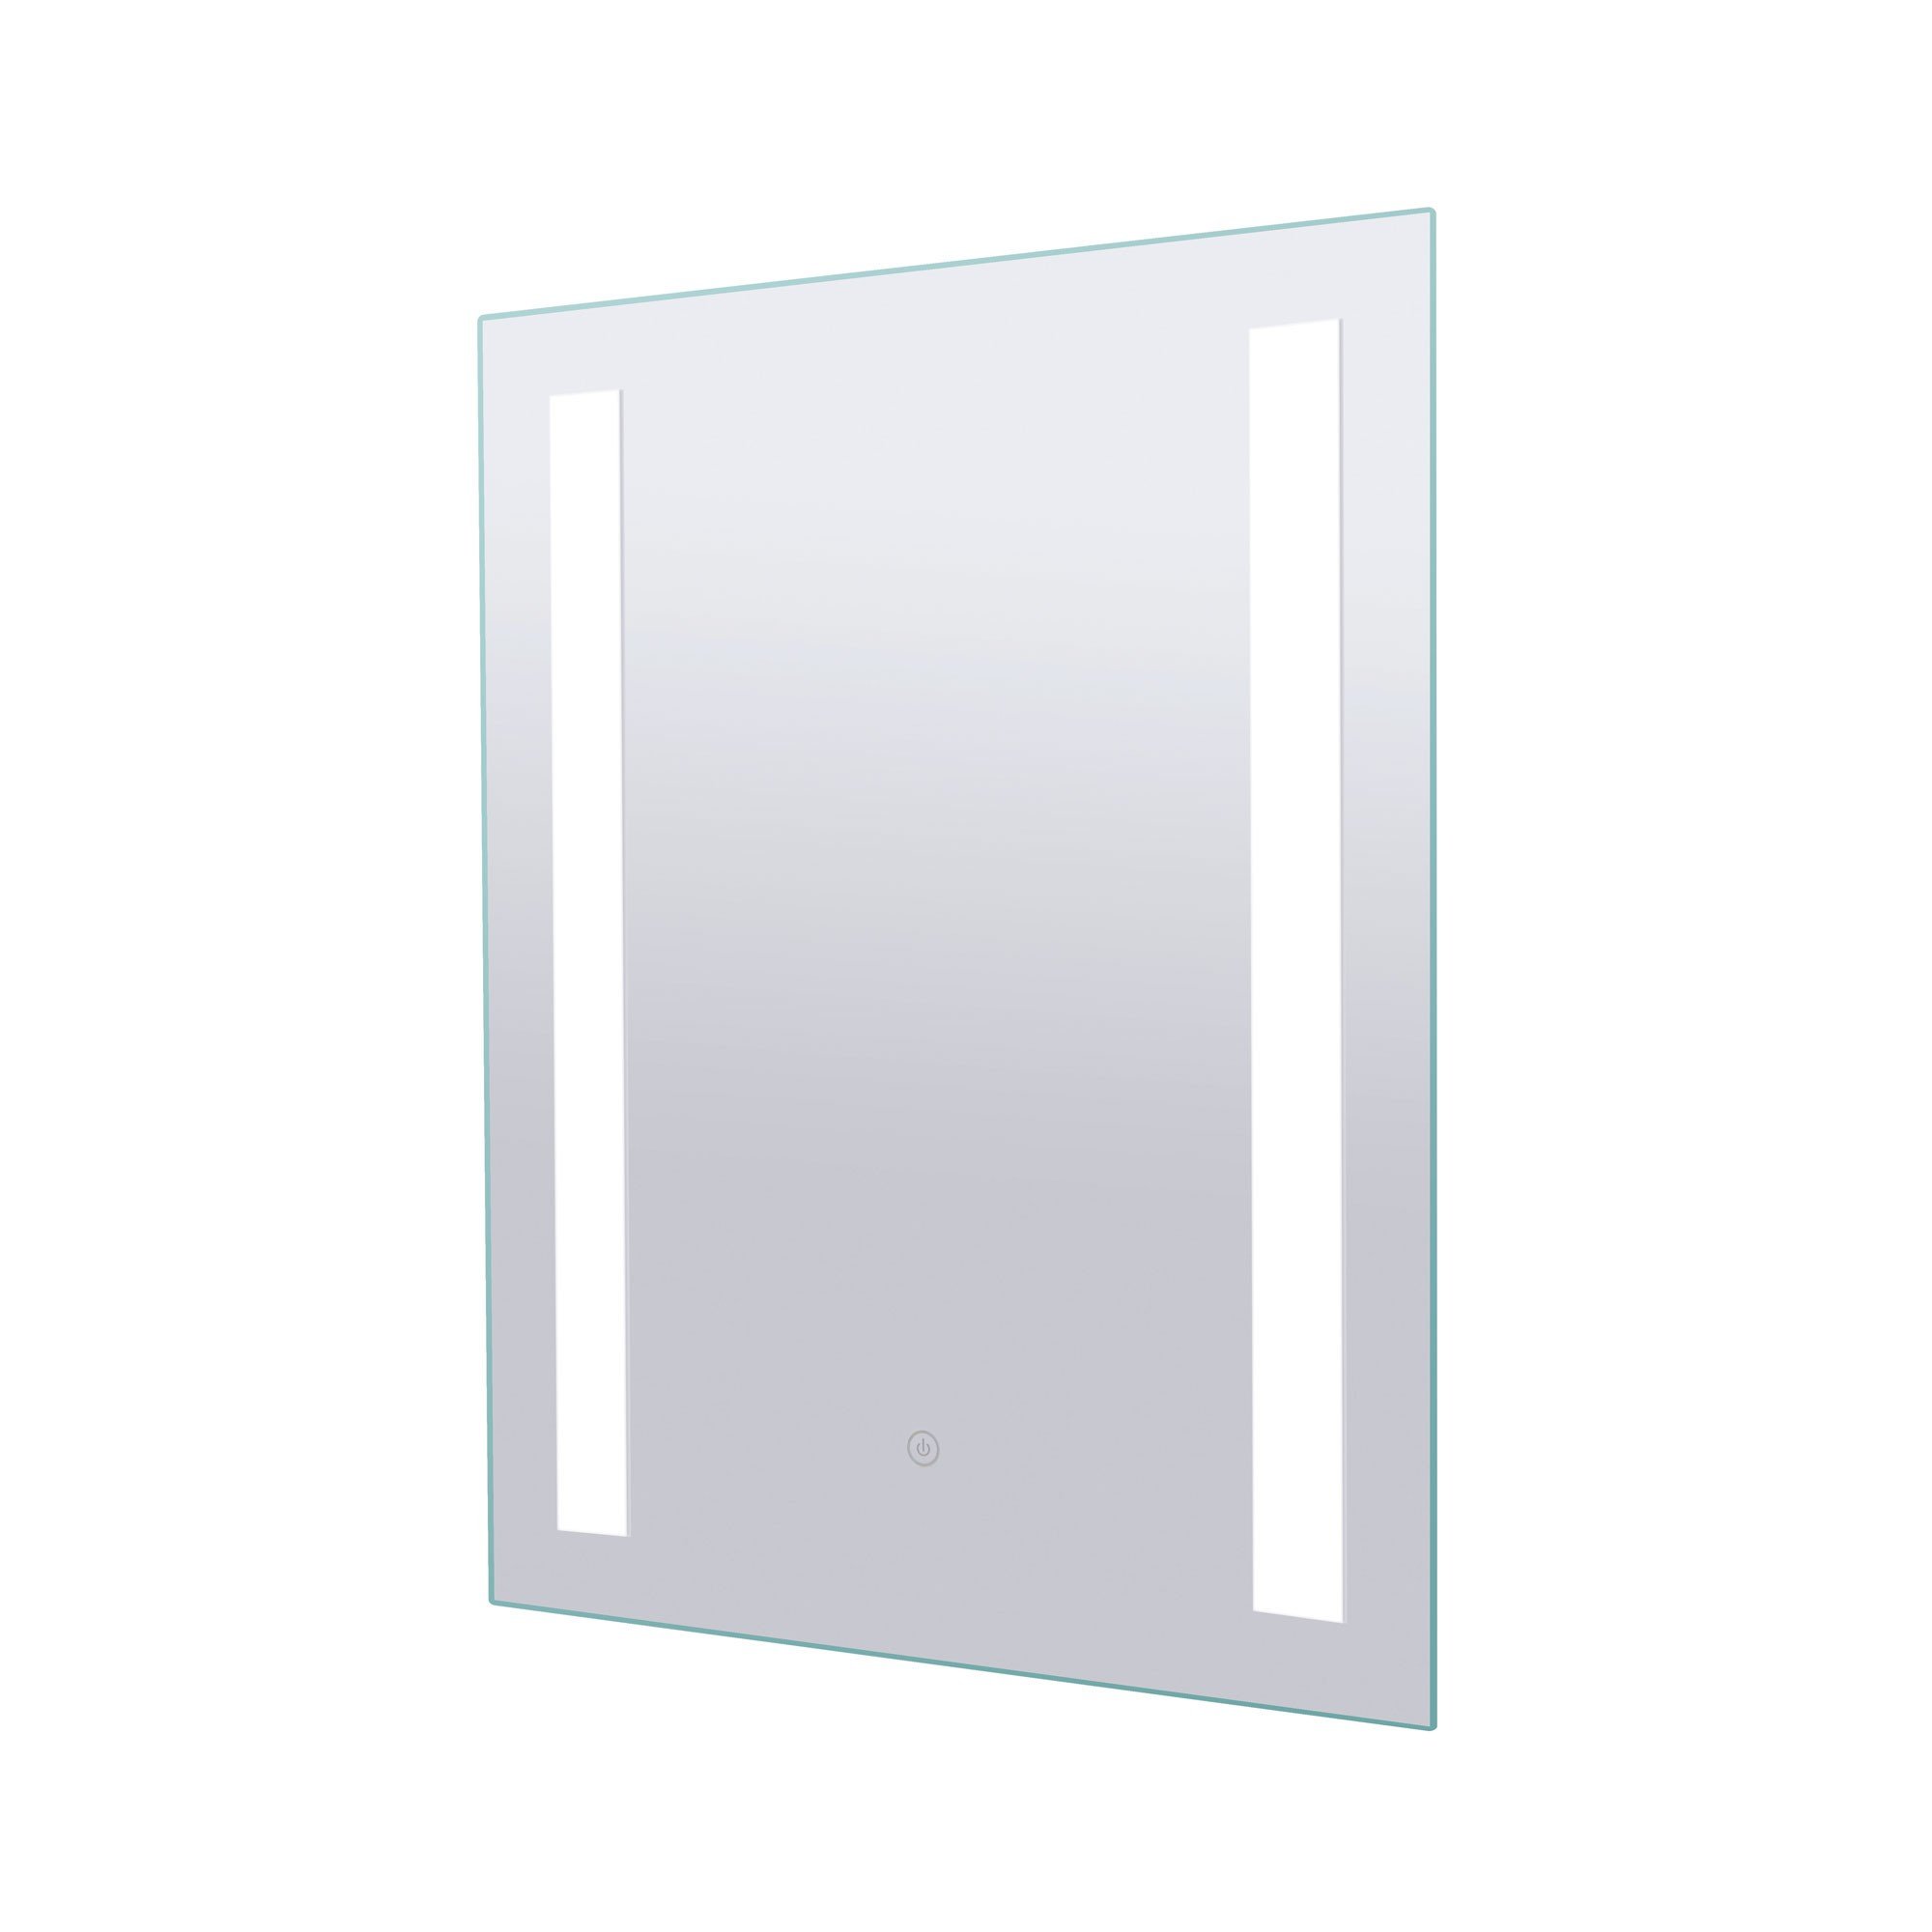 LED Square Mirror Mirrors 7th Sky Design 